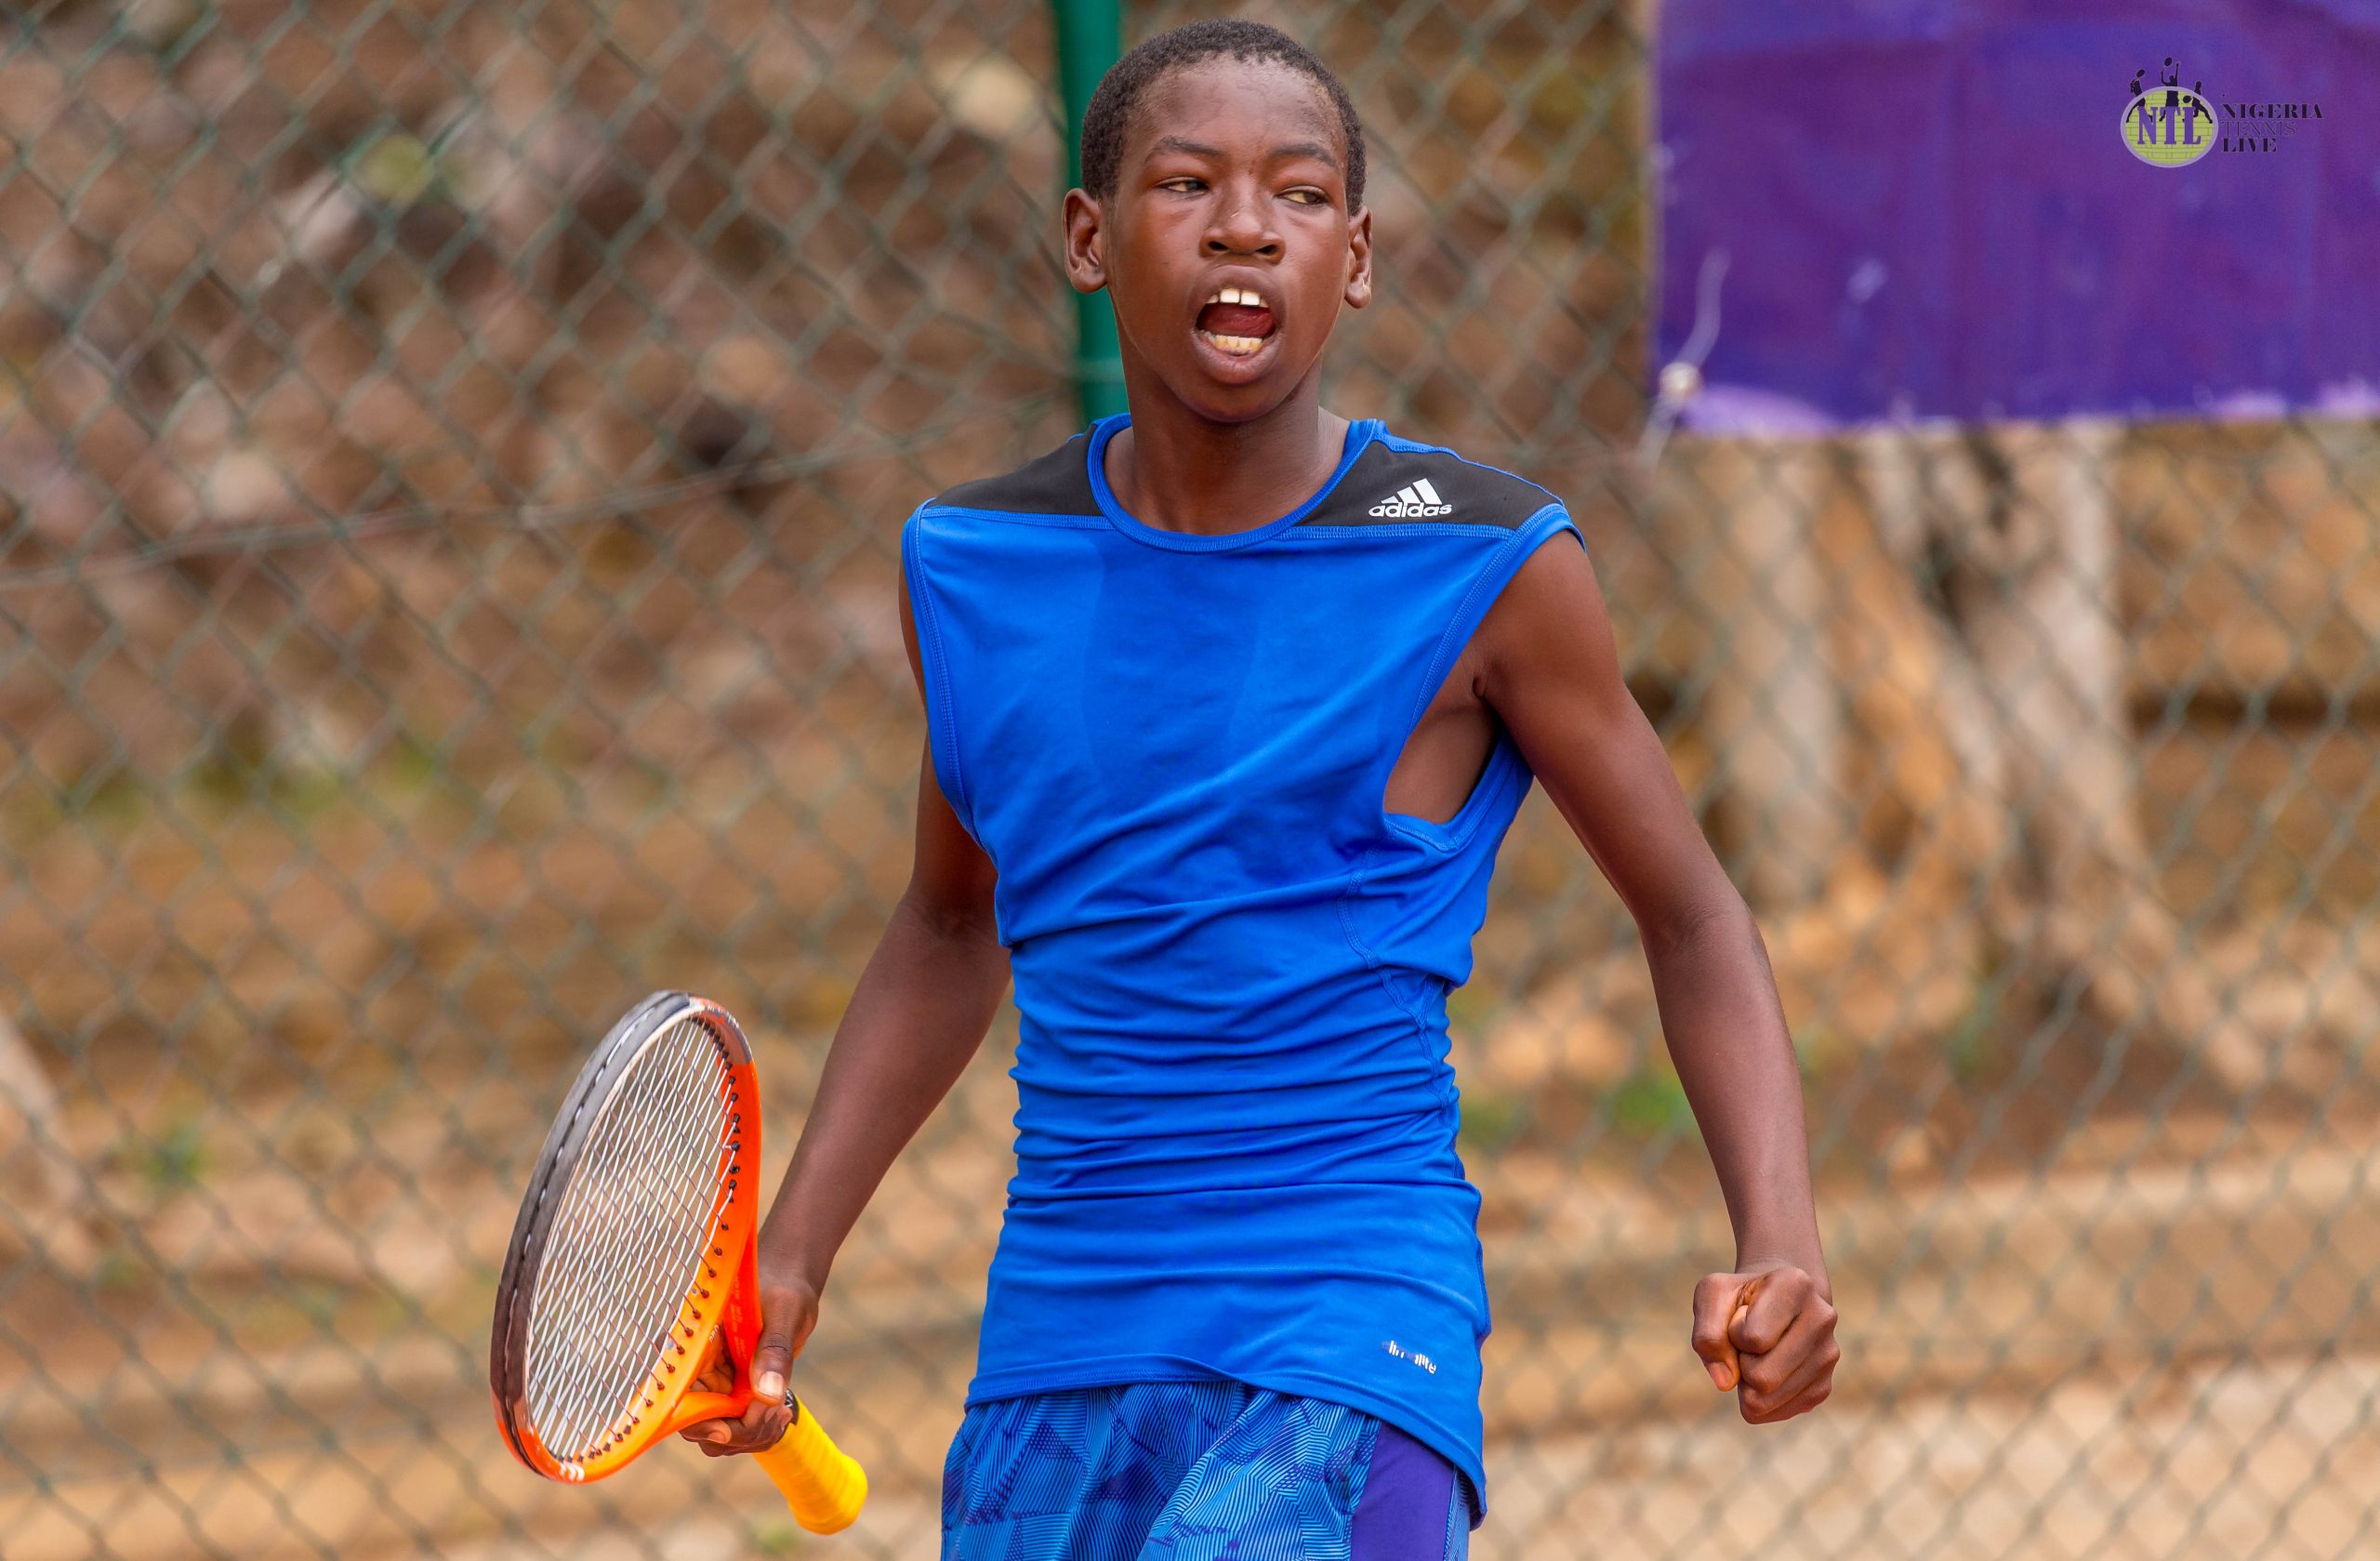 Plays, Moves Like Monfils – Tennis Fans Across The Globe Hail Seyi Ogunsakin